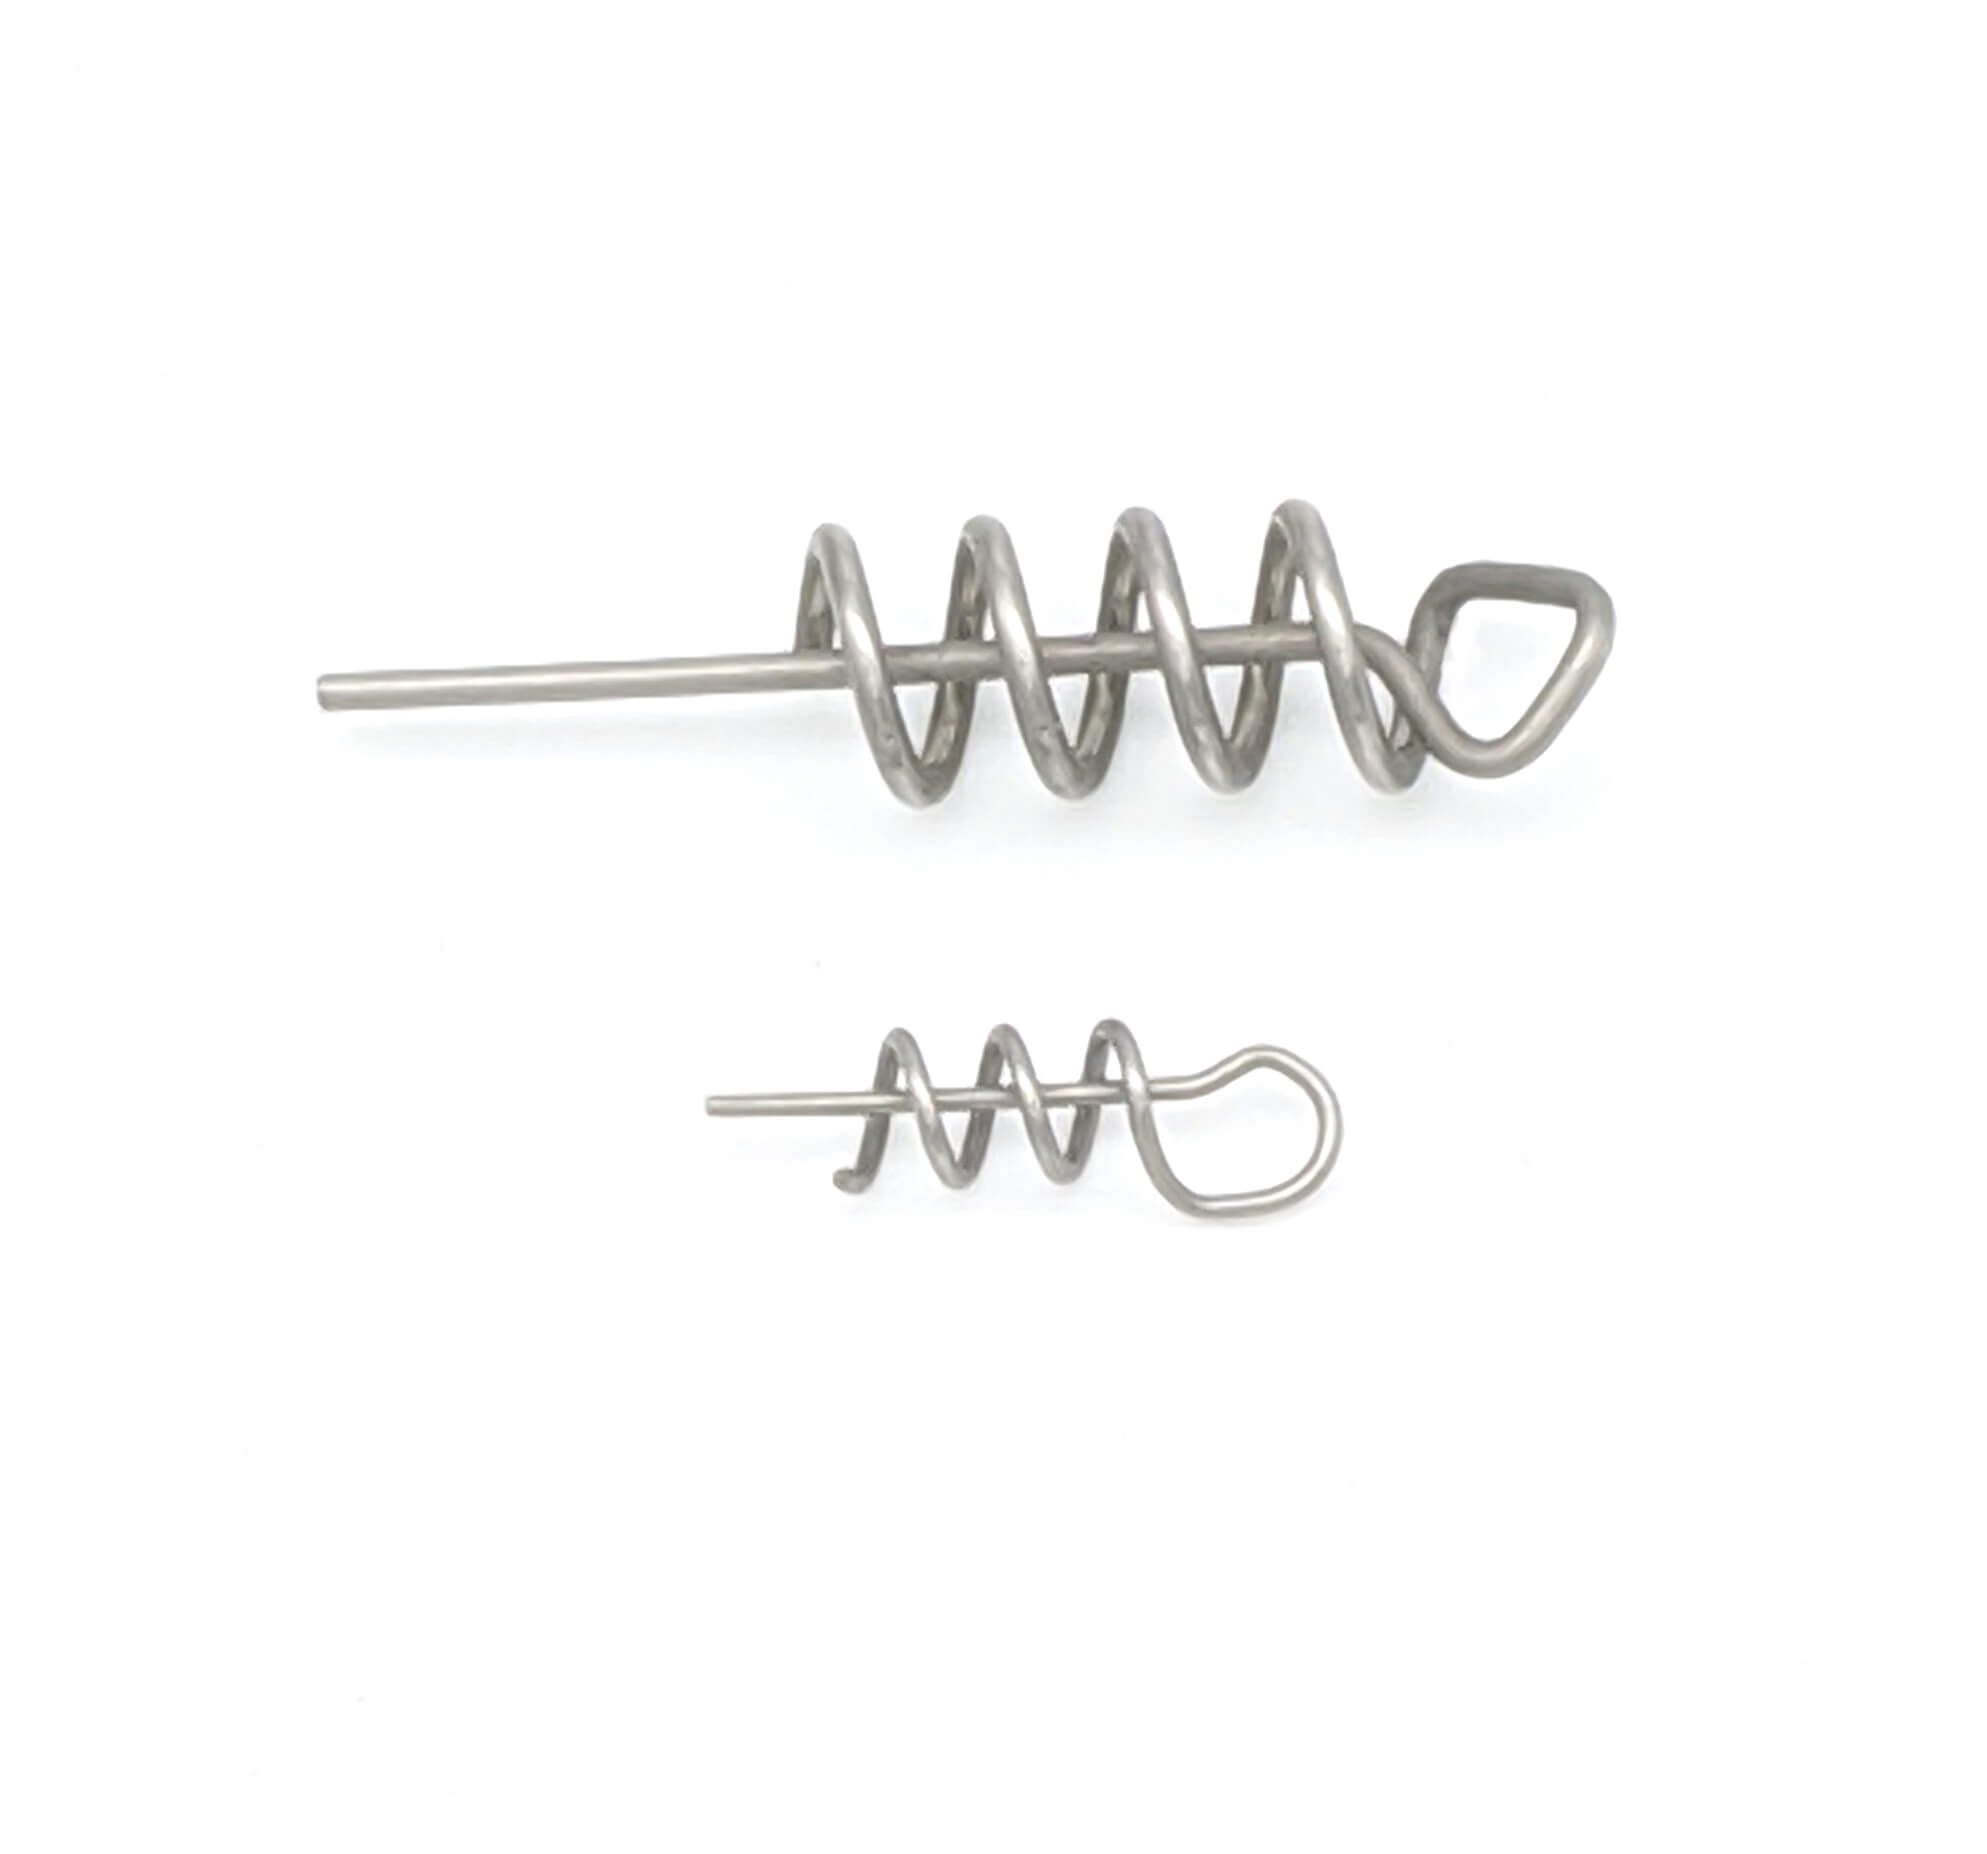 Twist-lock centering-pin spring